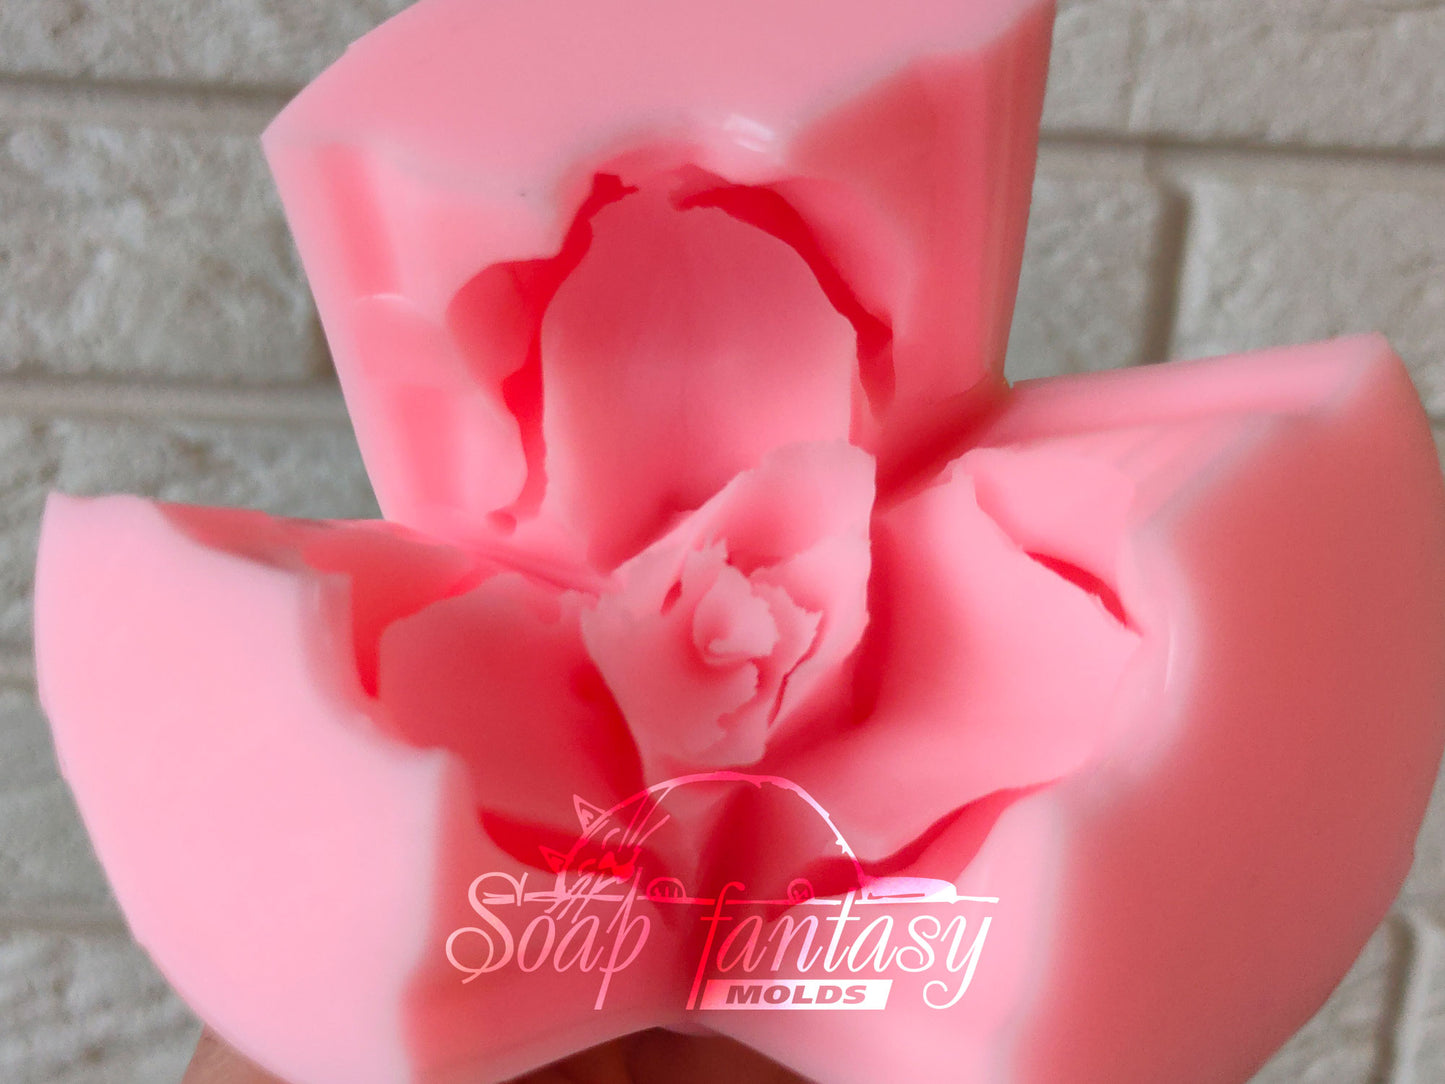 Rosebud "Elizabeth" silicone mold for soap making